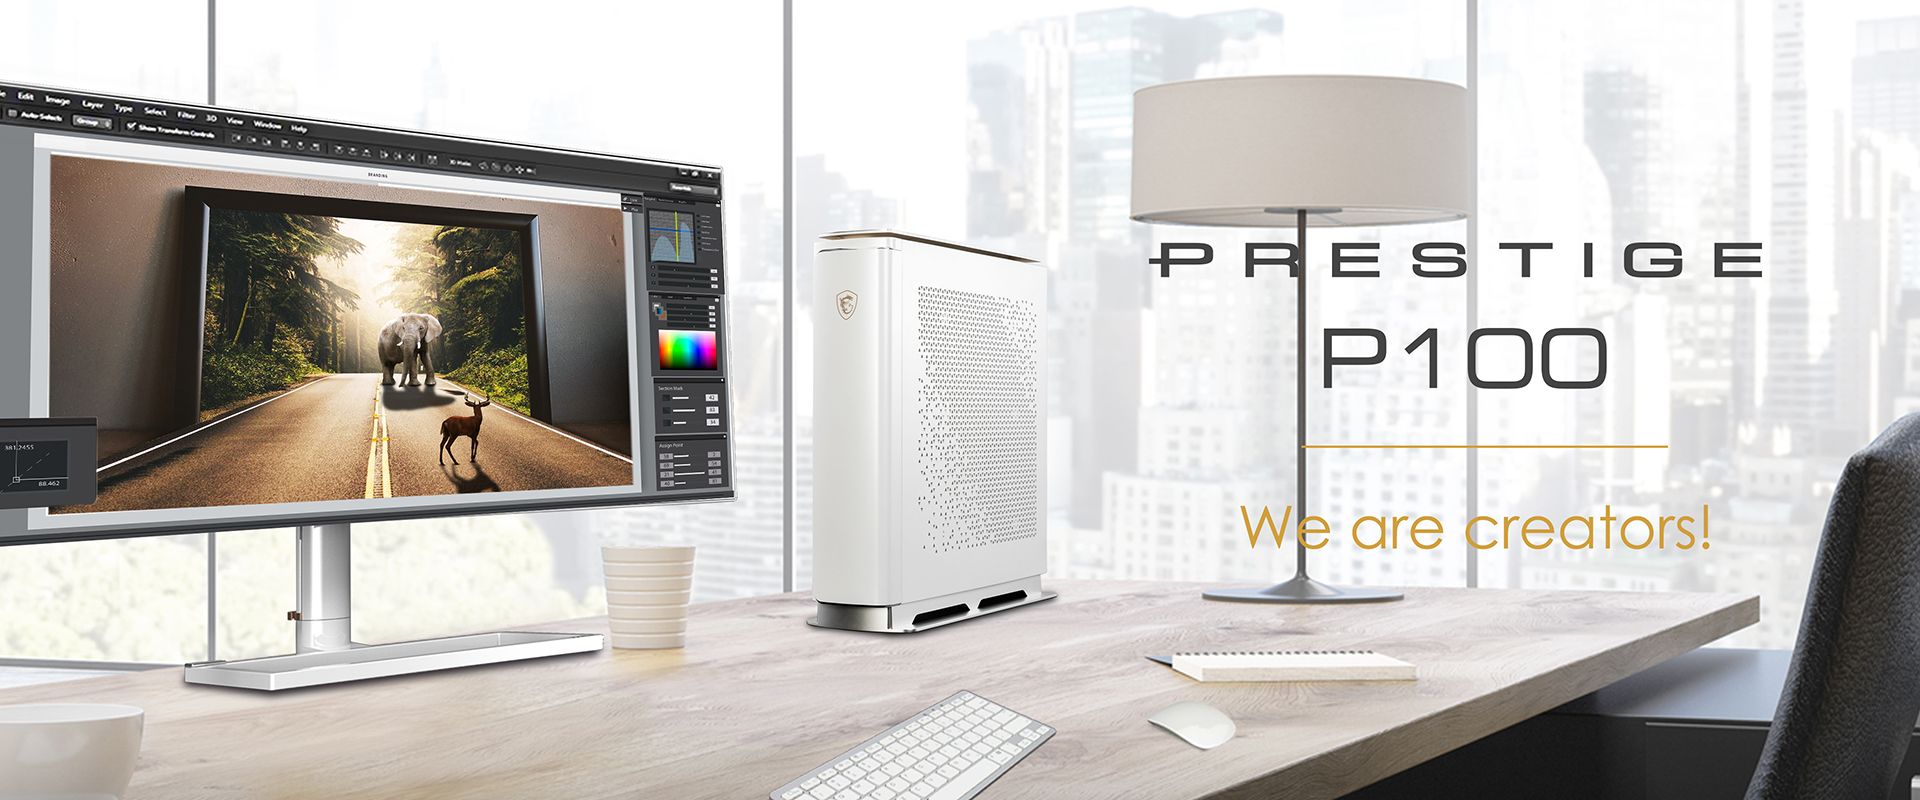 Prestige P100 computer standing on a desk near a window